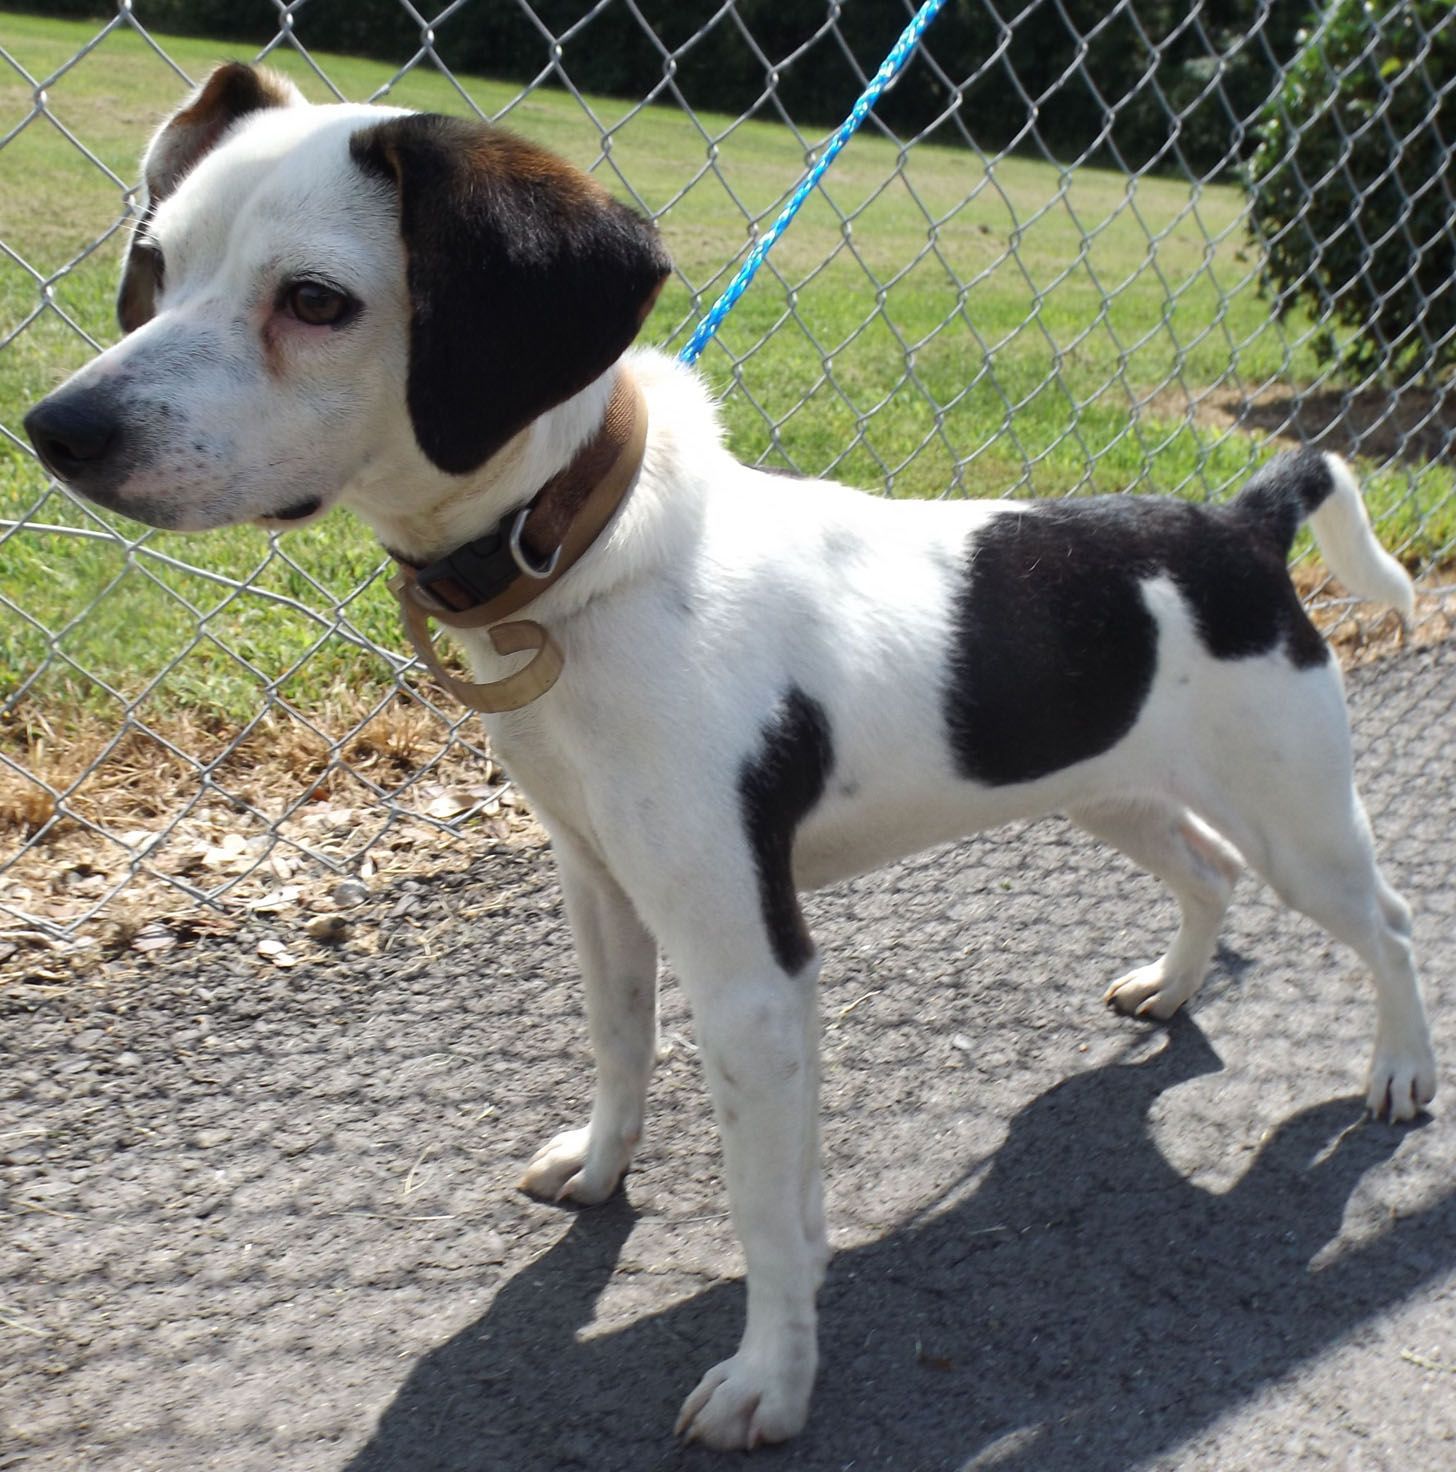 Snoopy-style beagle needs home - Salisbury Post | Salisbury Post